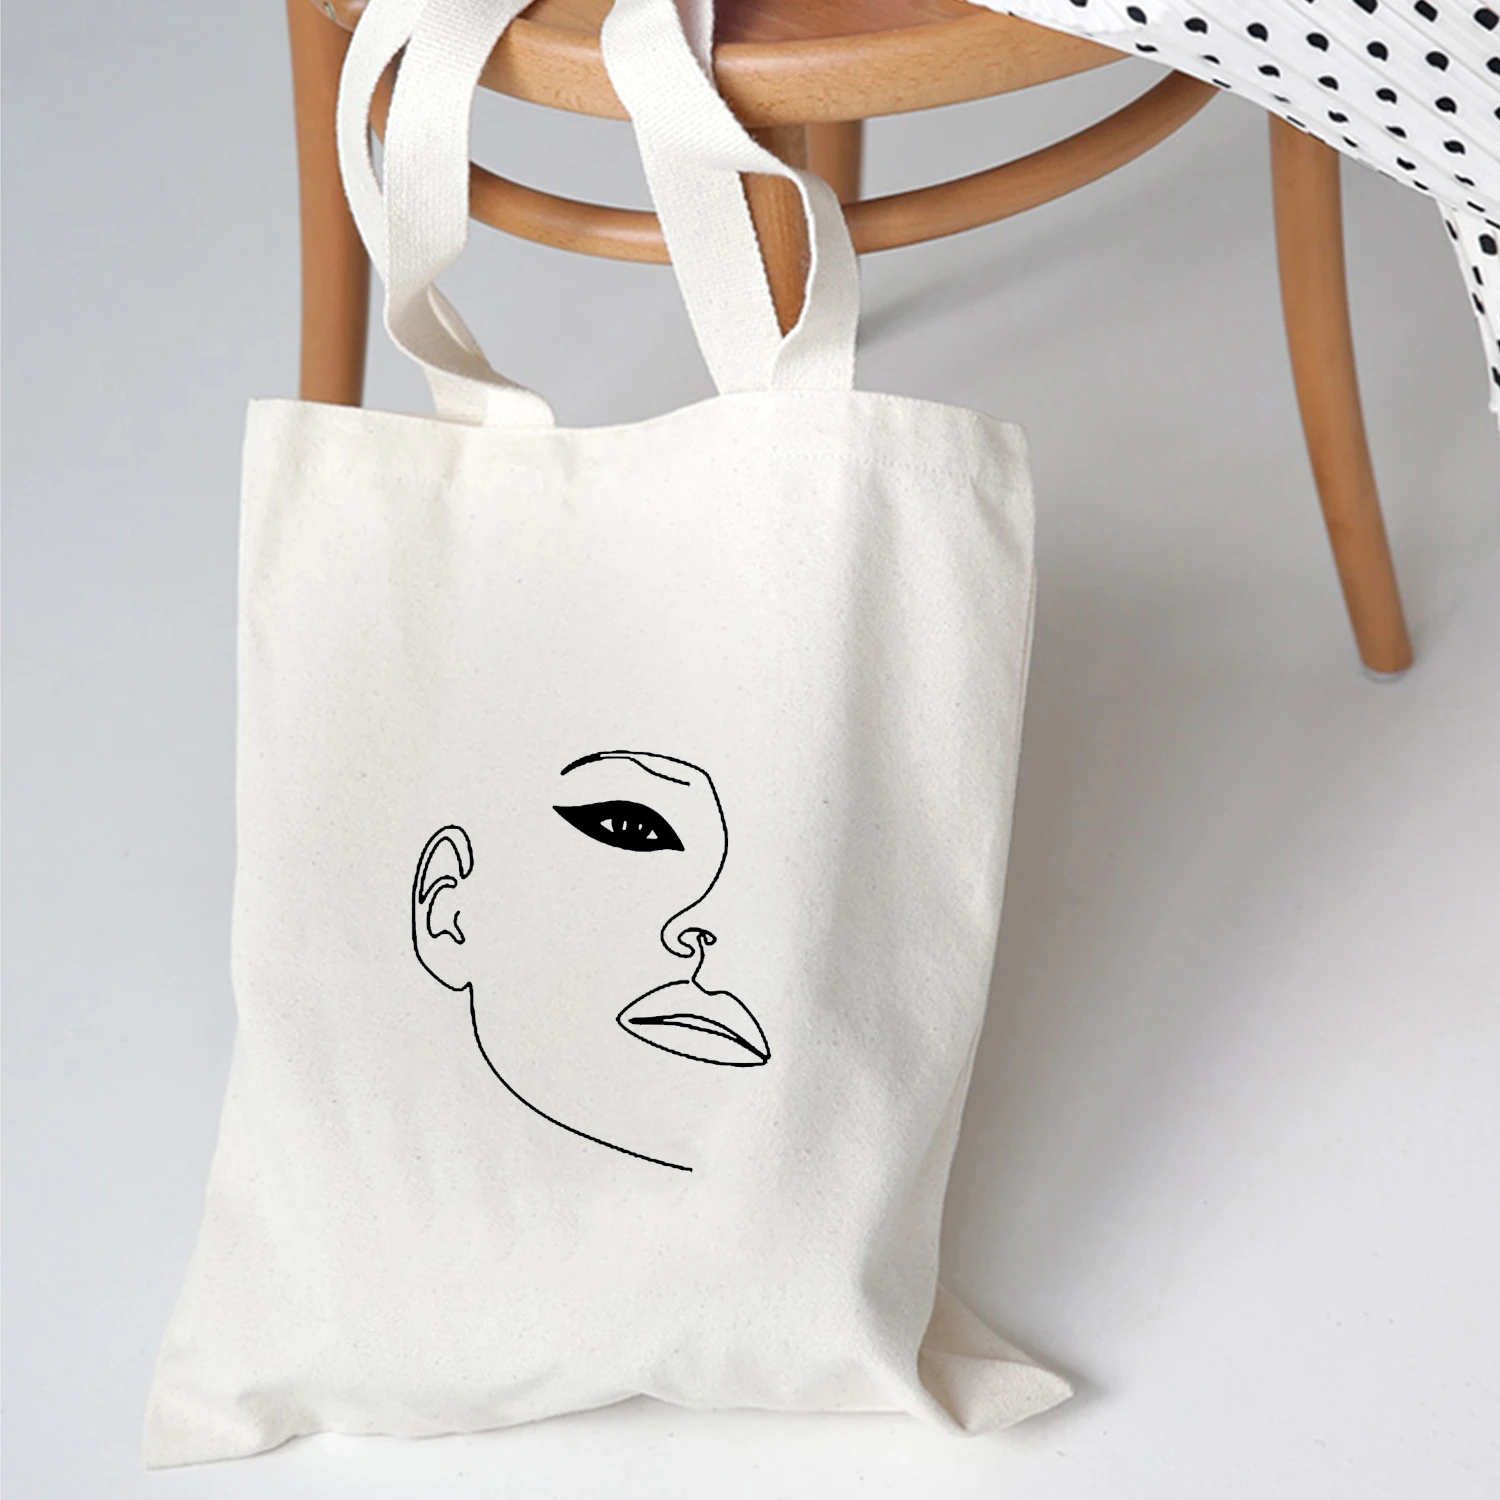 Funny Design Canvas Tote Bag Handbag Purse for Women 